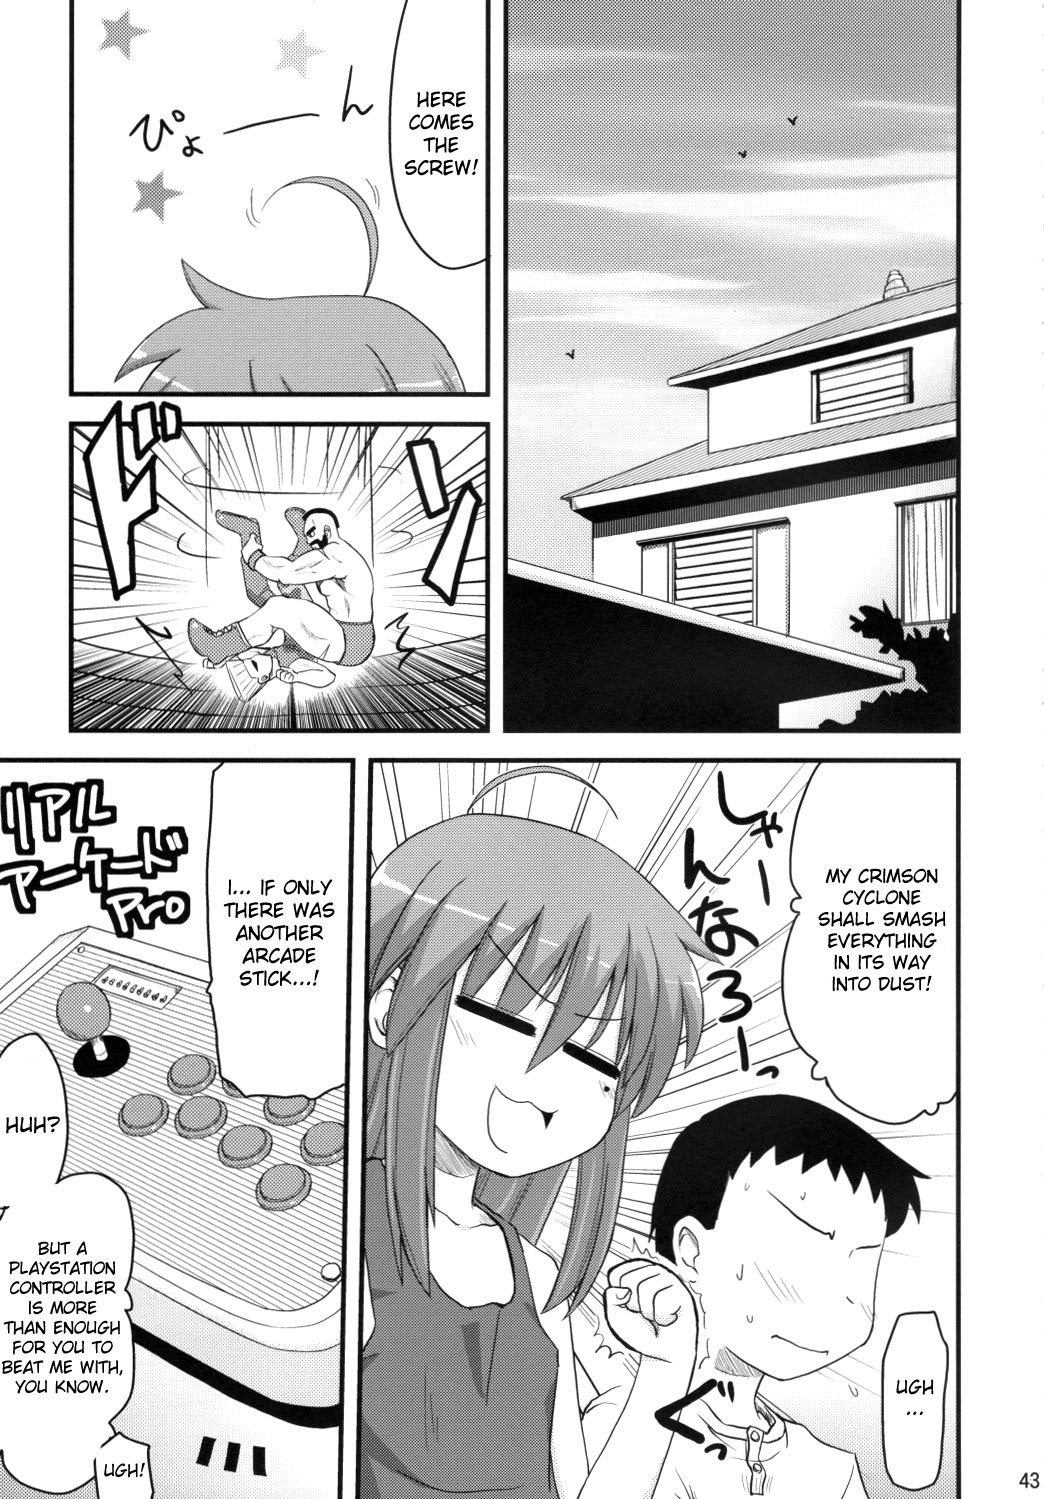 Konata and Oh-zu 4 people each and every one + 1 hentai manga picture 39